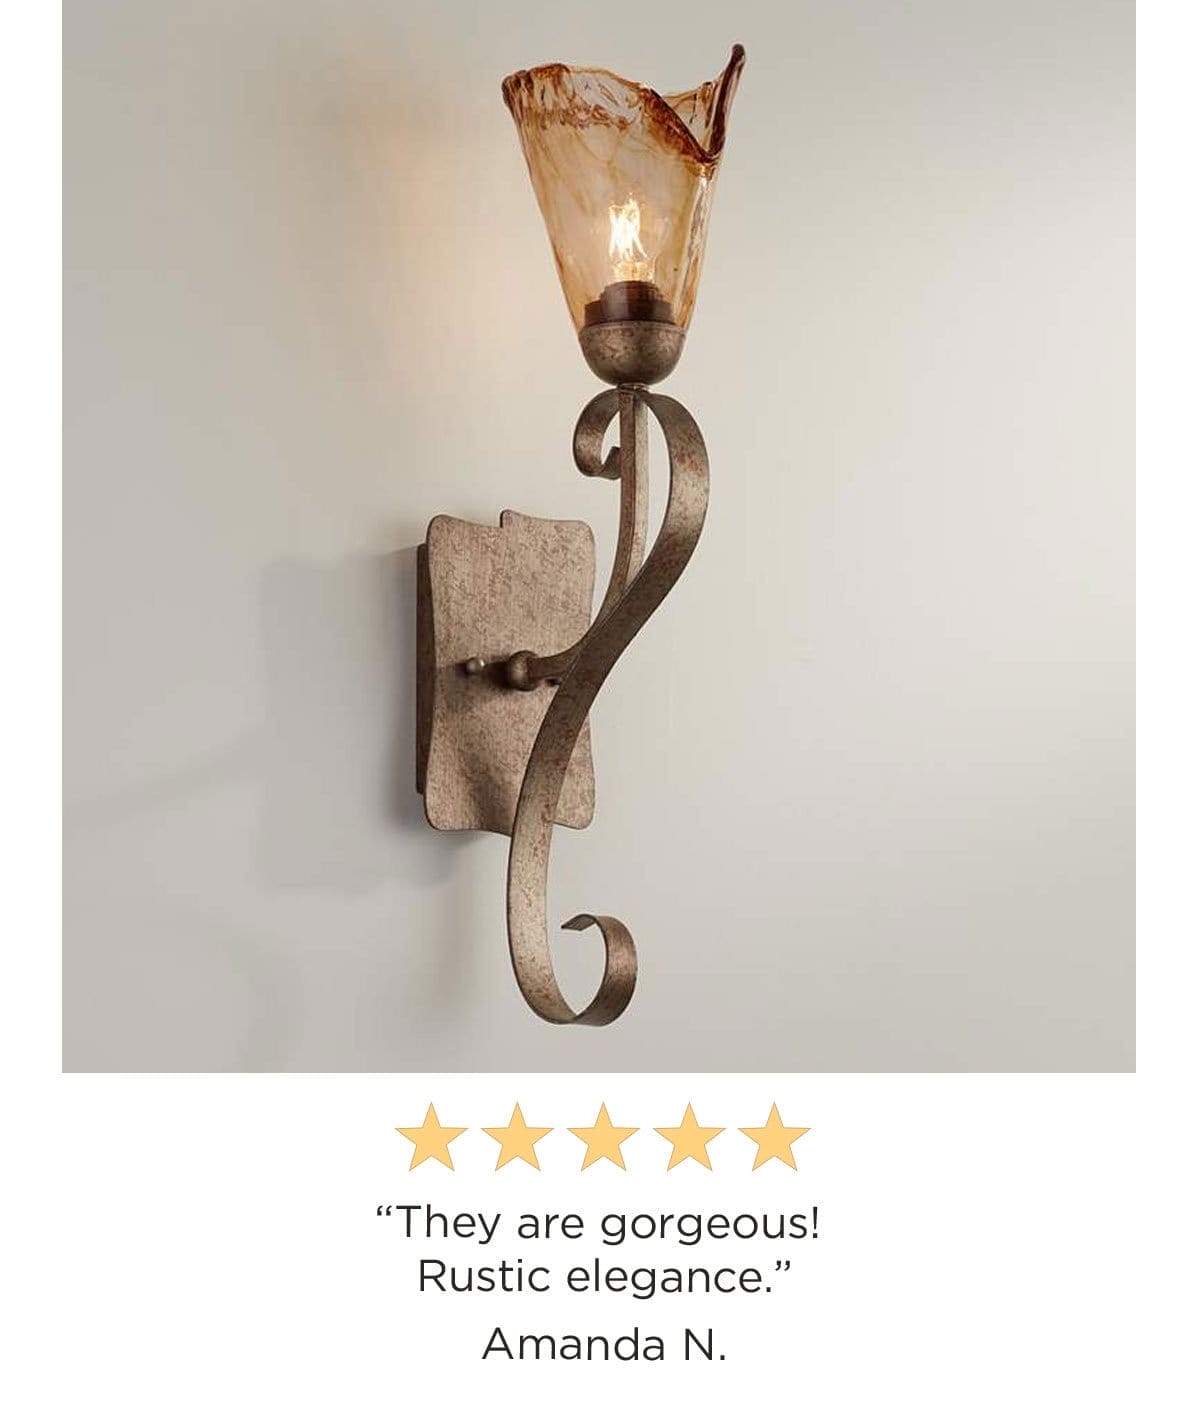 5 stars - "They are gorgeous! Rustic elegance." Amanda N.